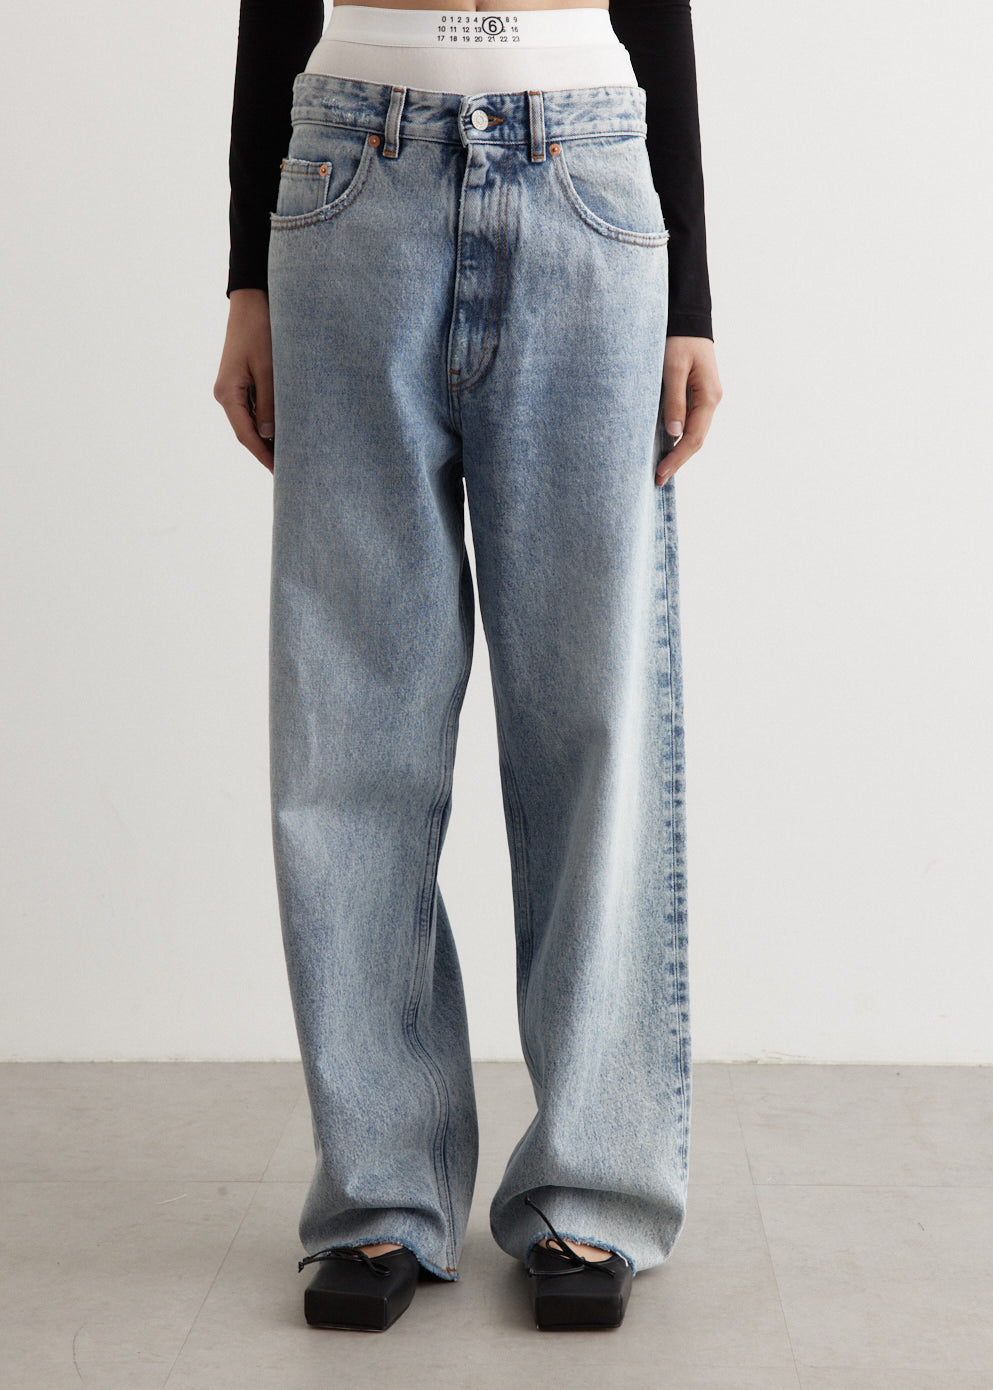 Denim Jeans Pockets 5